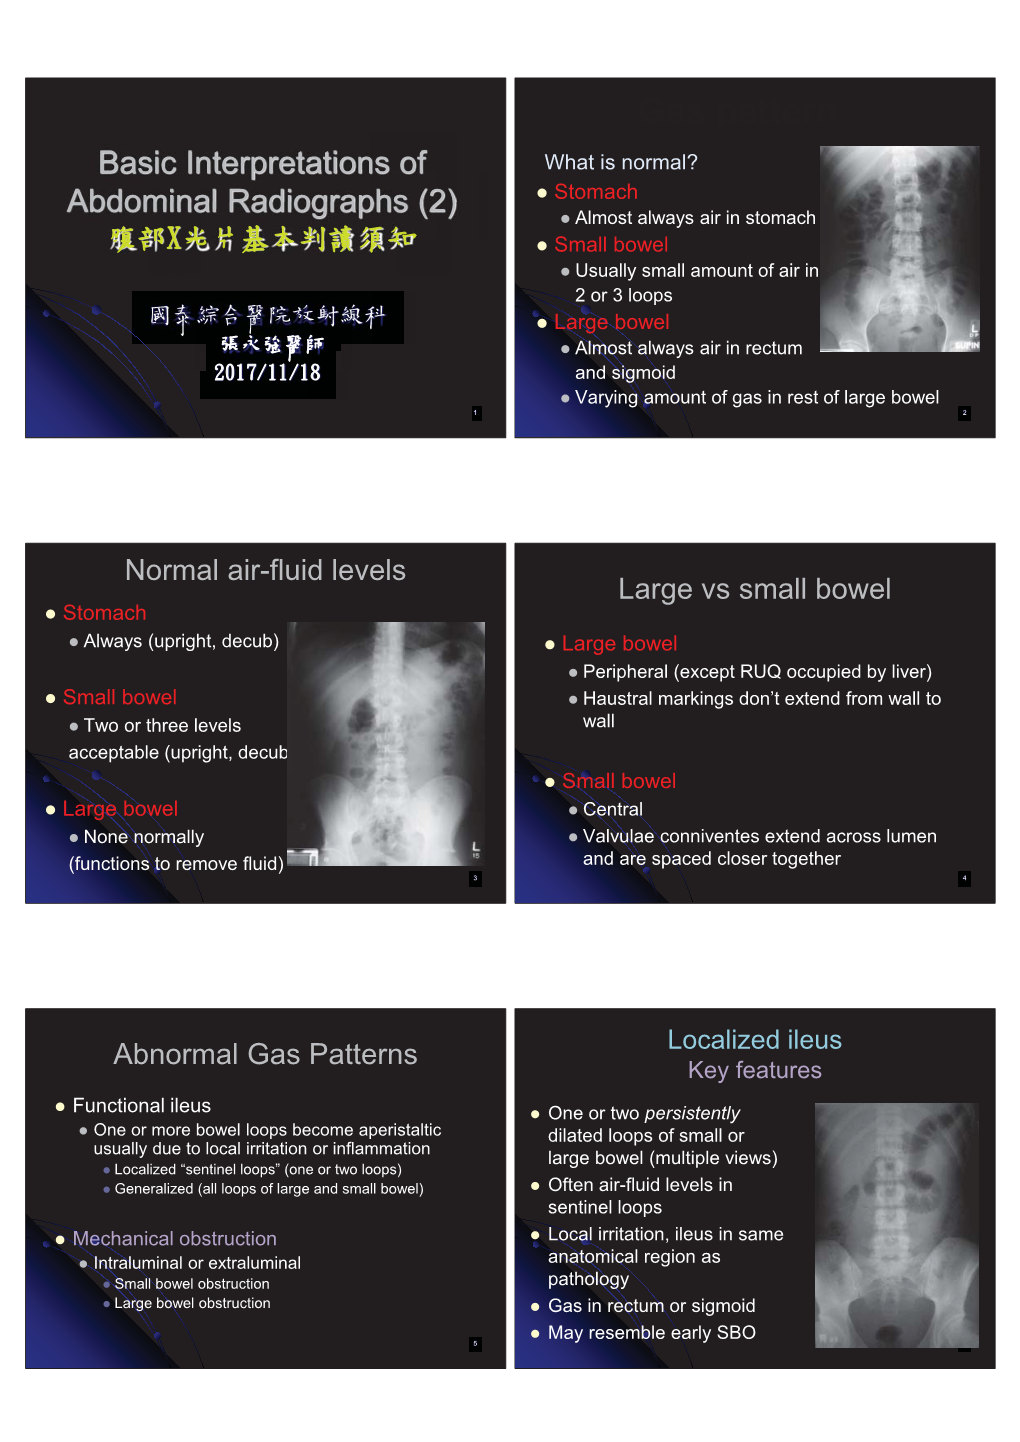 Basic Principles in Interpretation of Abdominal Radiograph